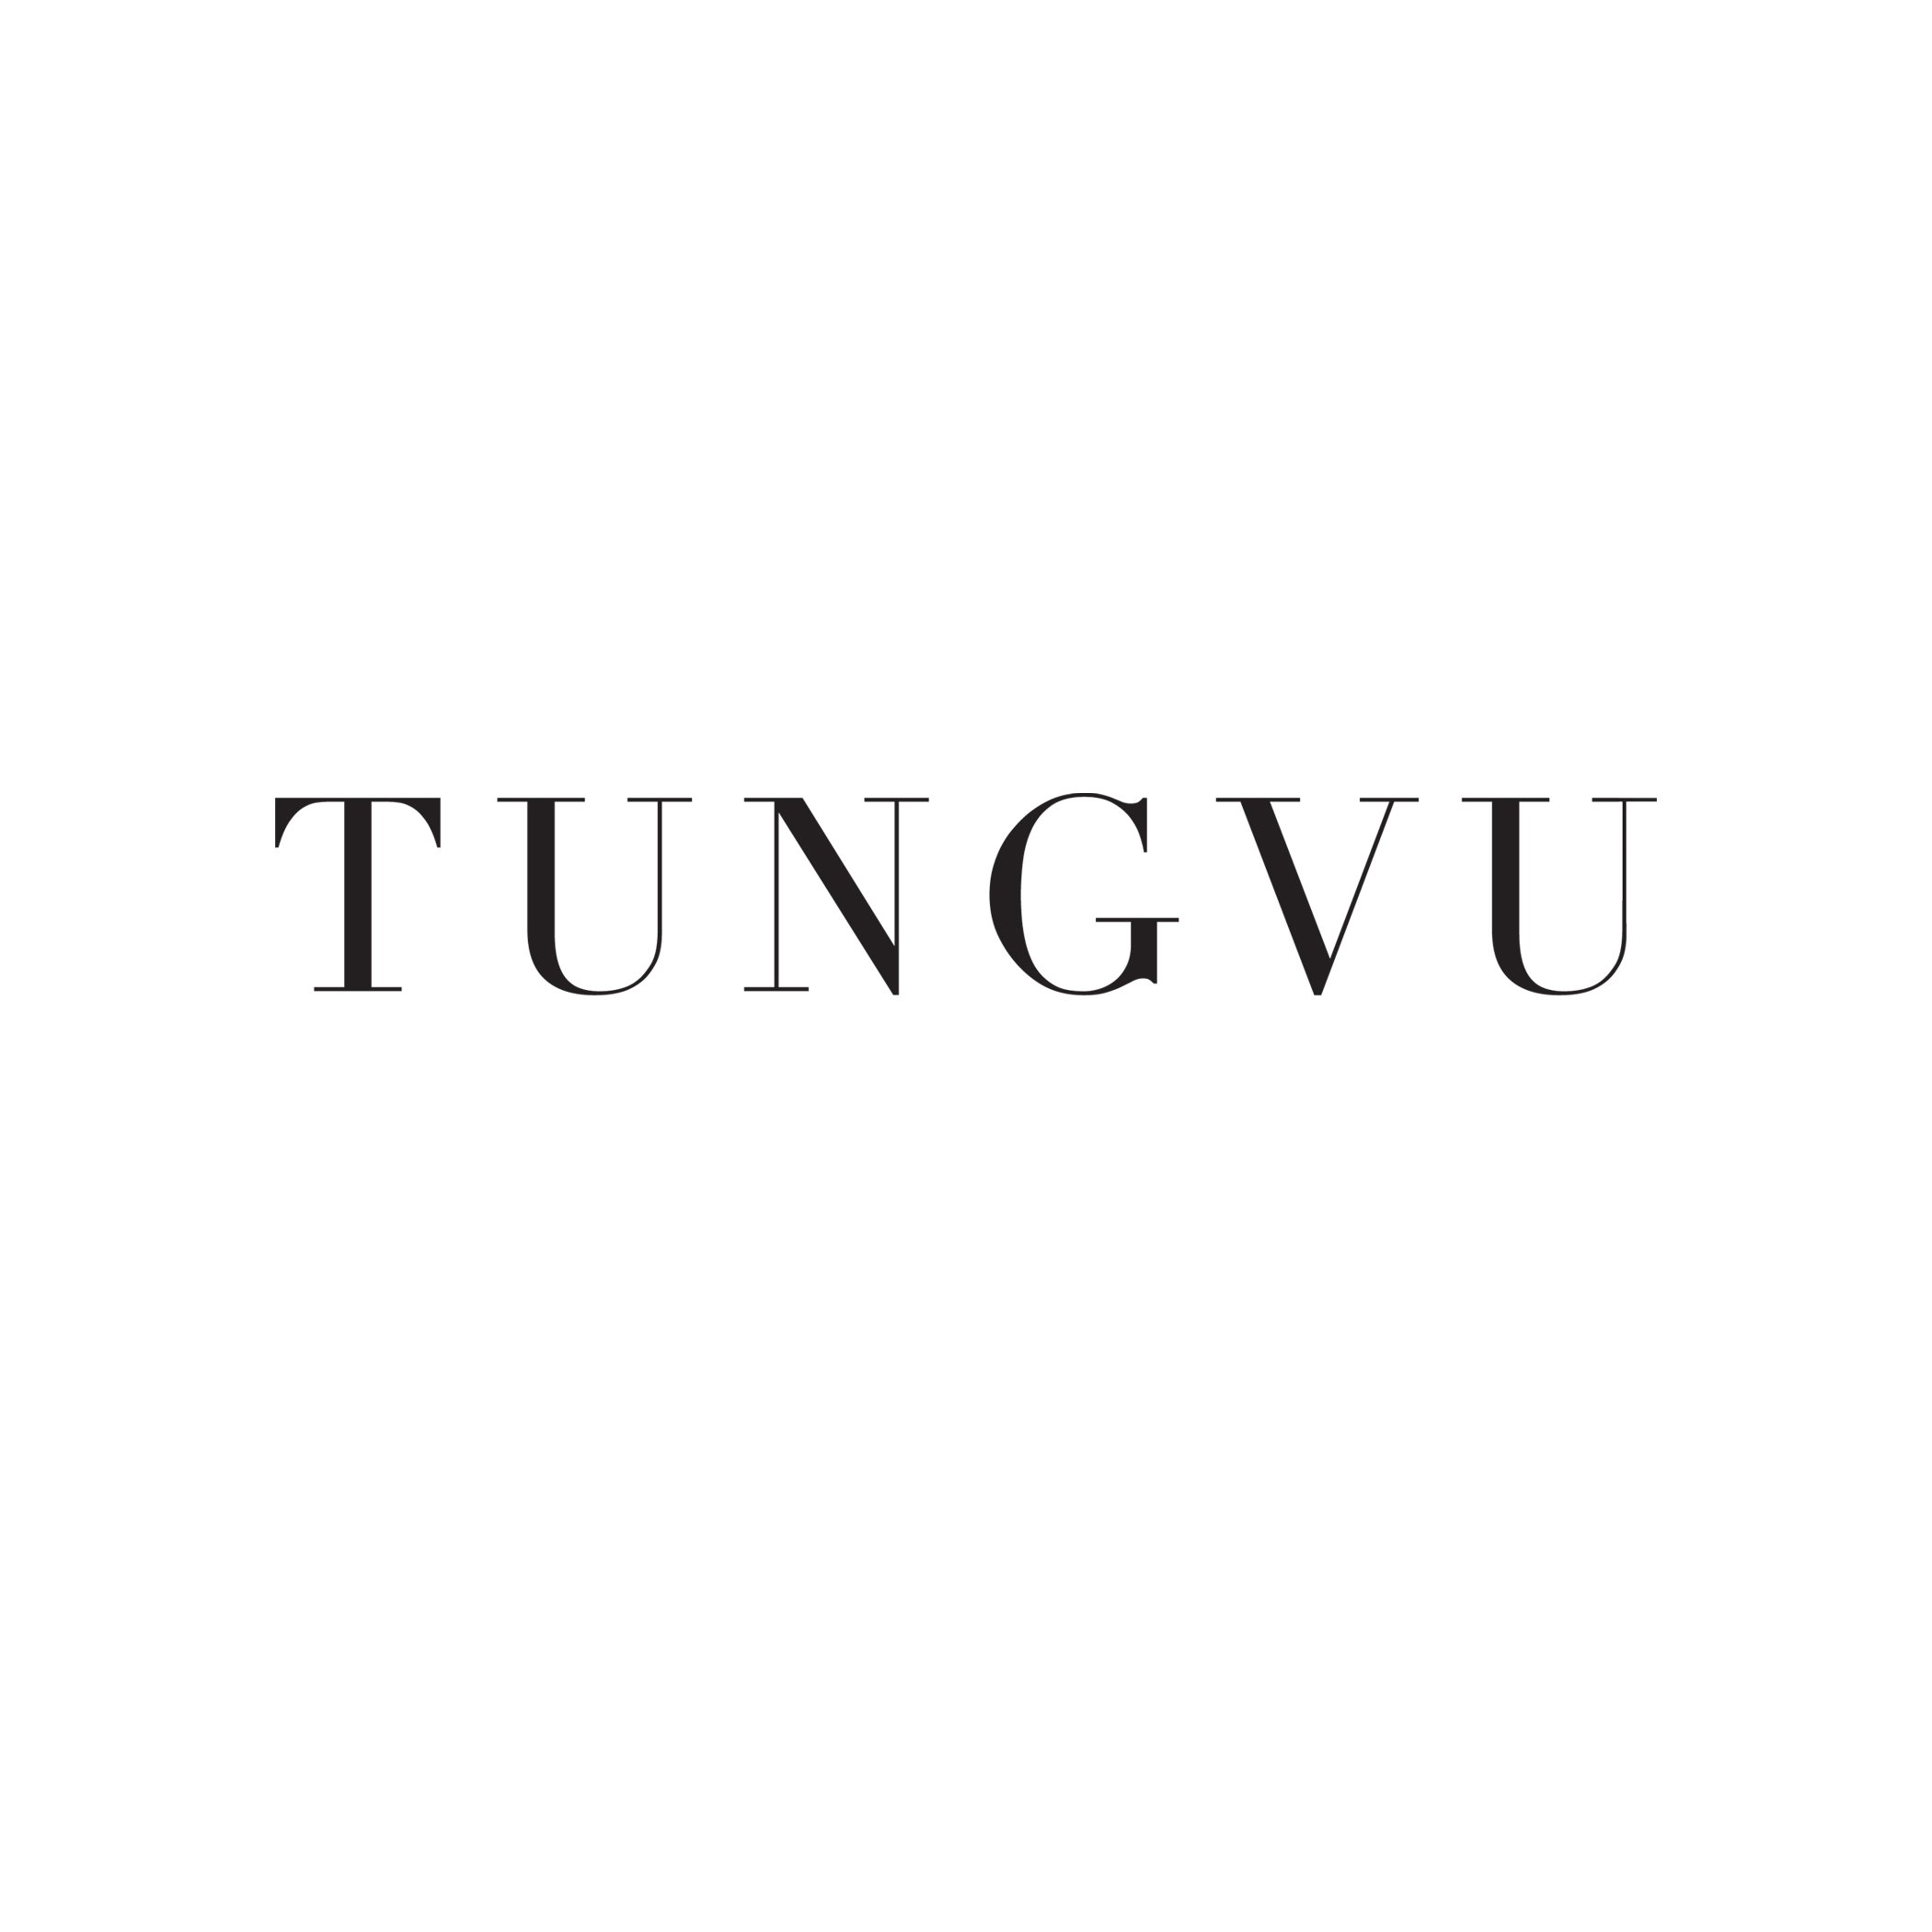 TUNG VU logo.jpg